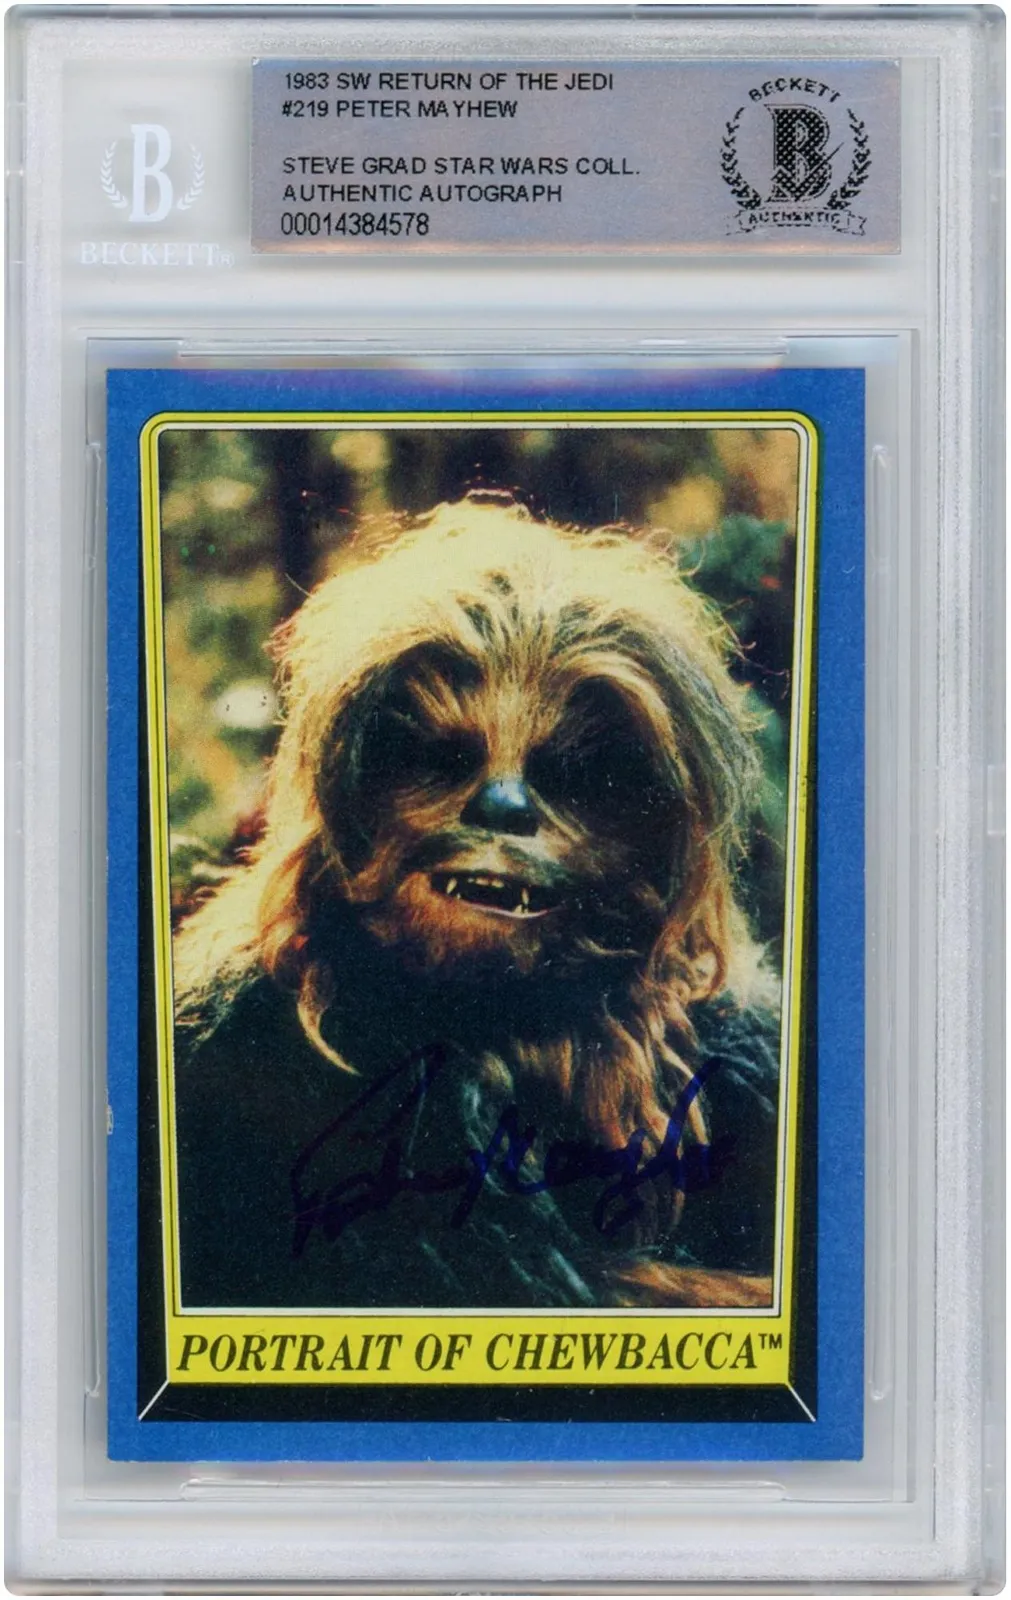 Peter Mayhew Star Wars Trading Card Item#12304784